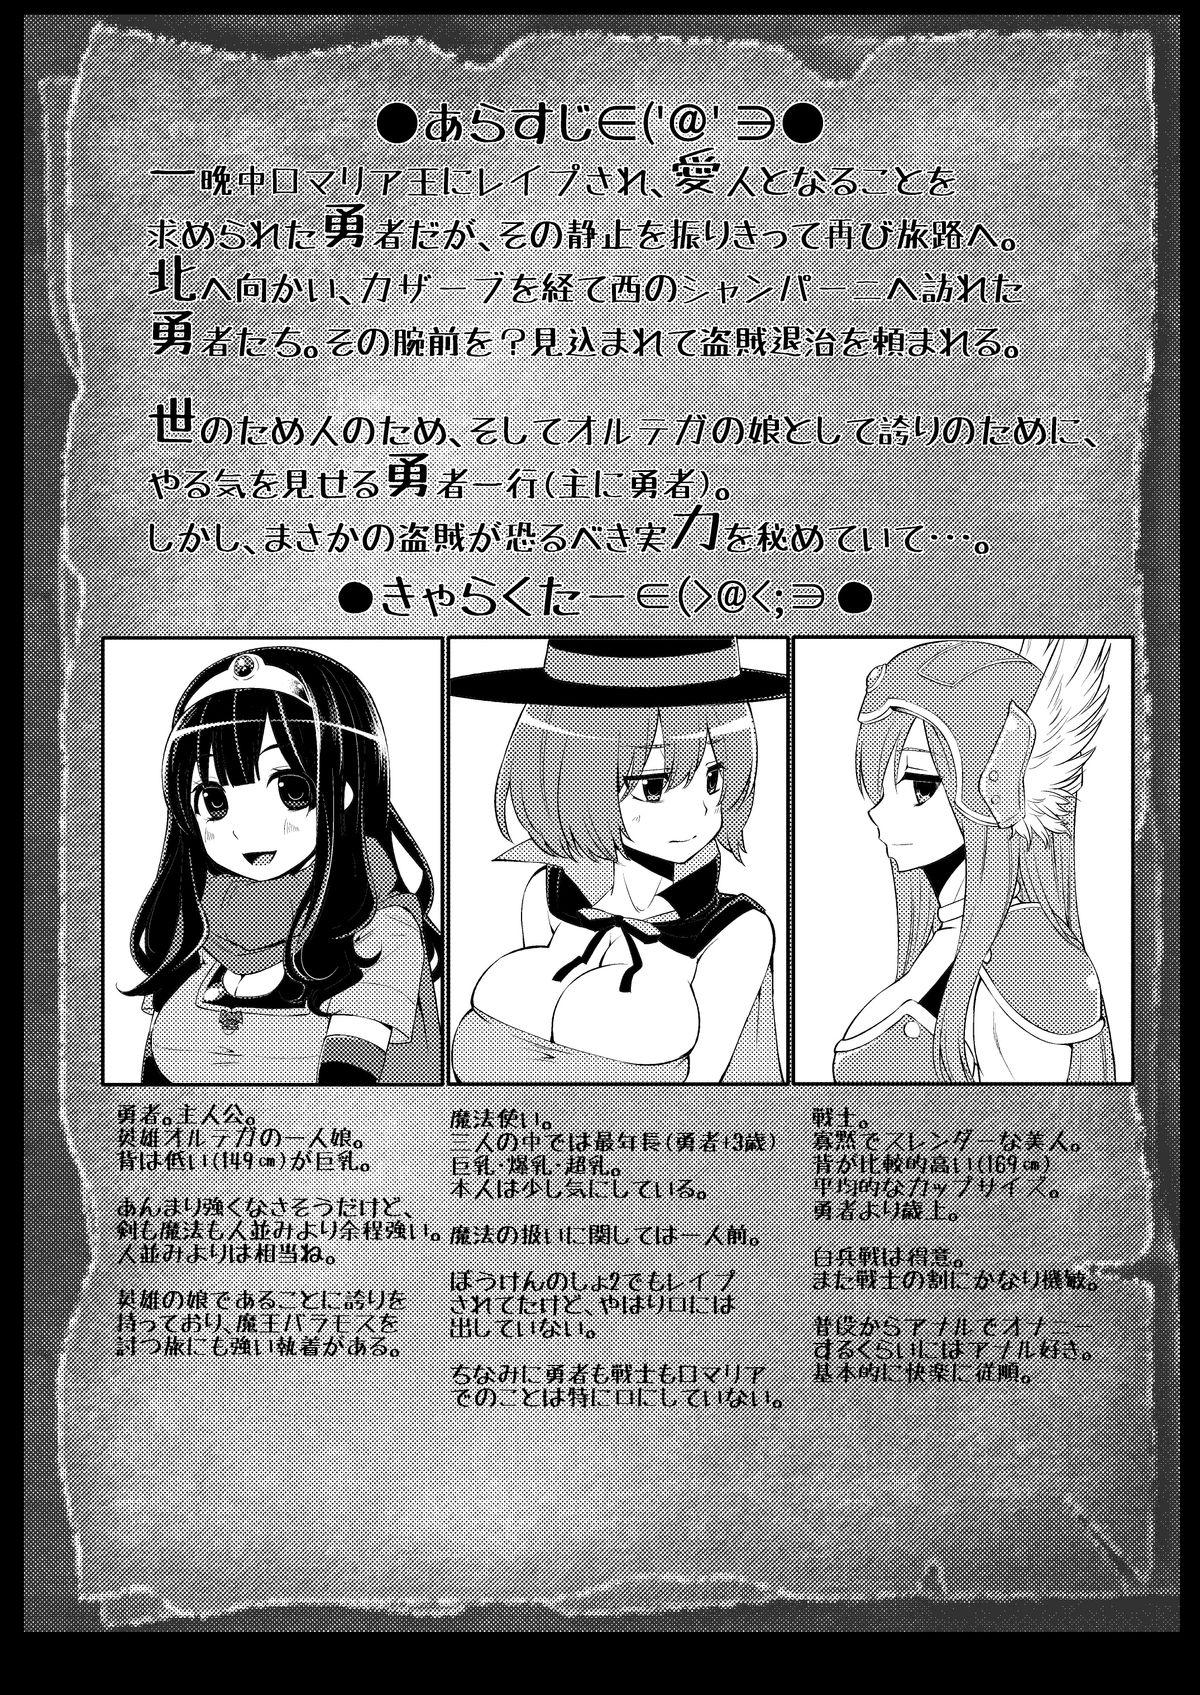 Tits Benmusu Bouken no Sho 3 - Dragon quest Lover - Page 2